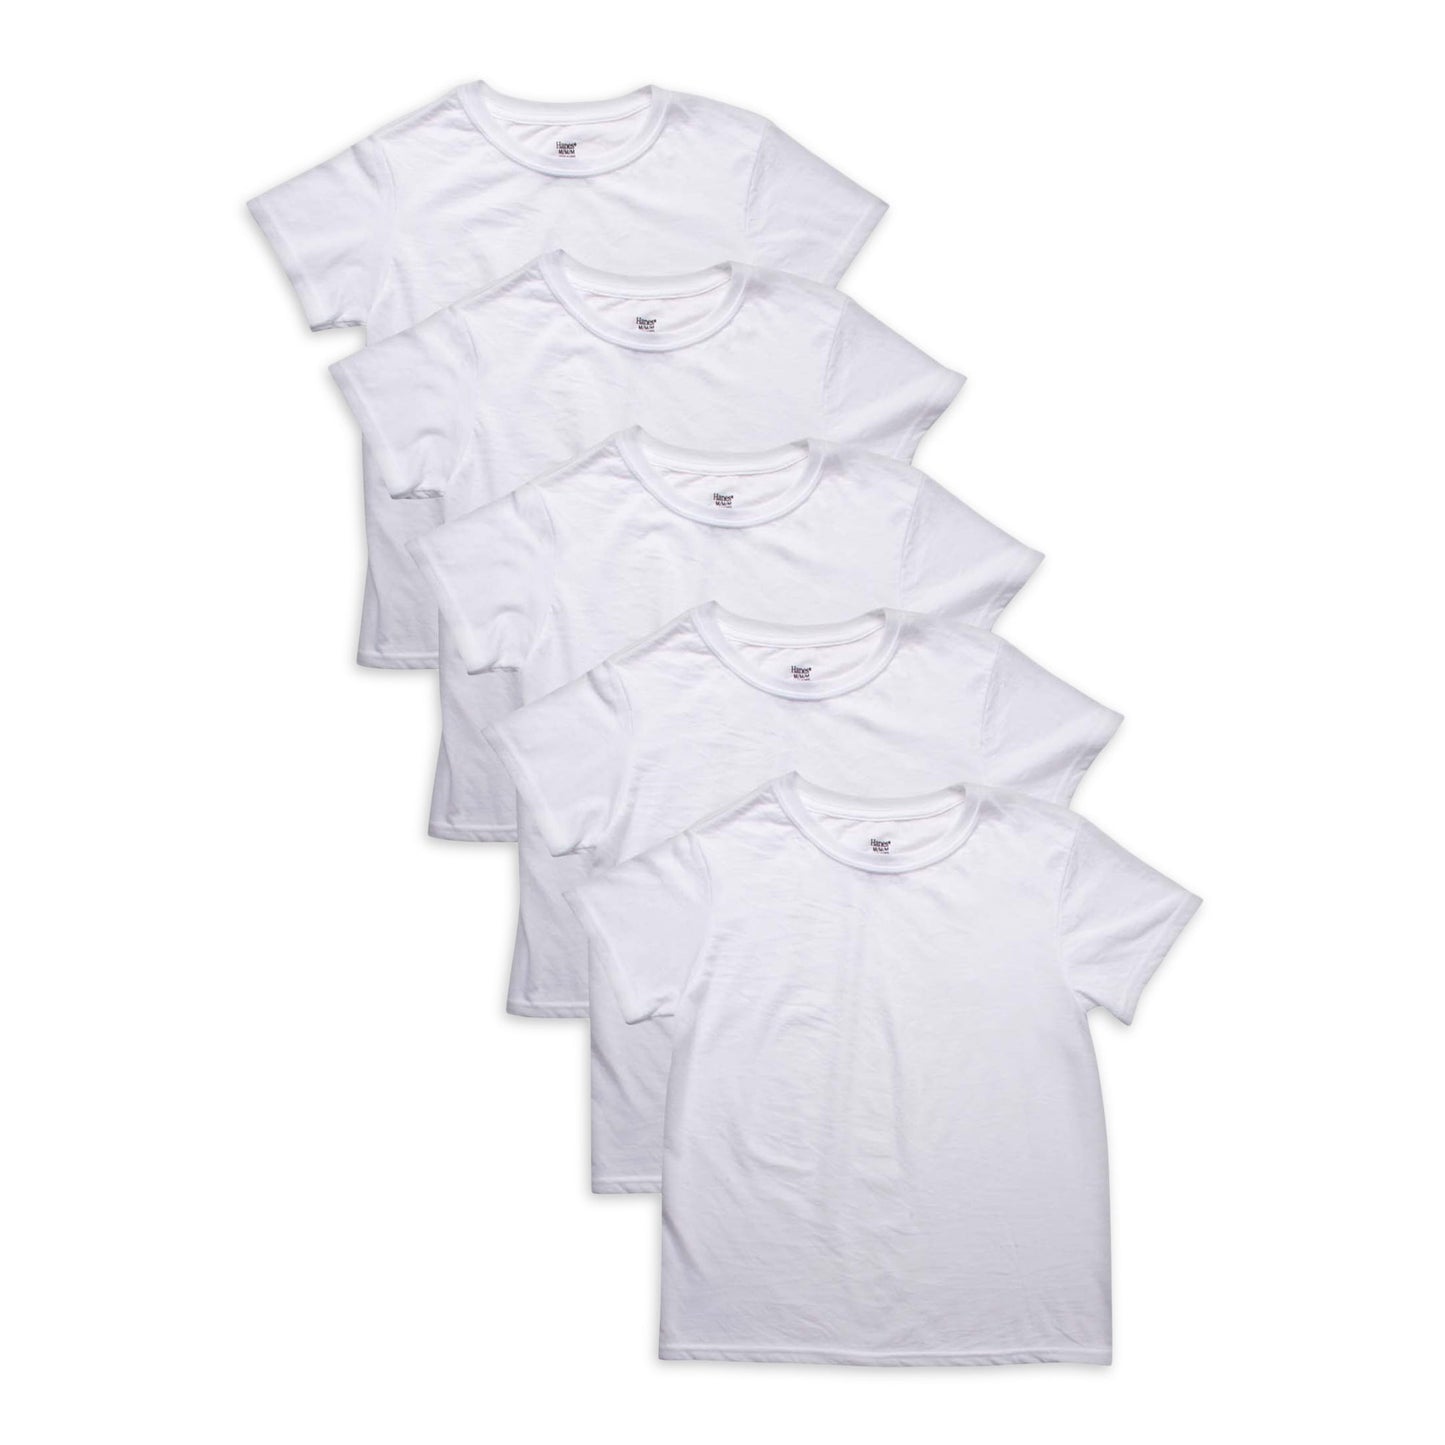 Hanes Boys White Crew T-Shirt Undershirts, 5 Pack